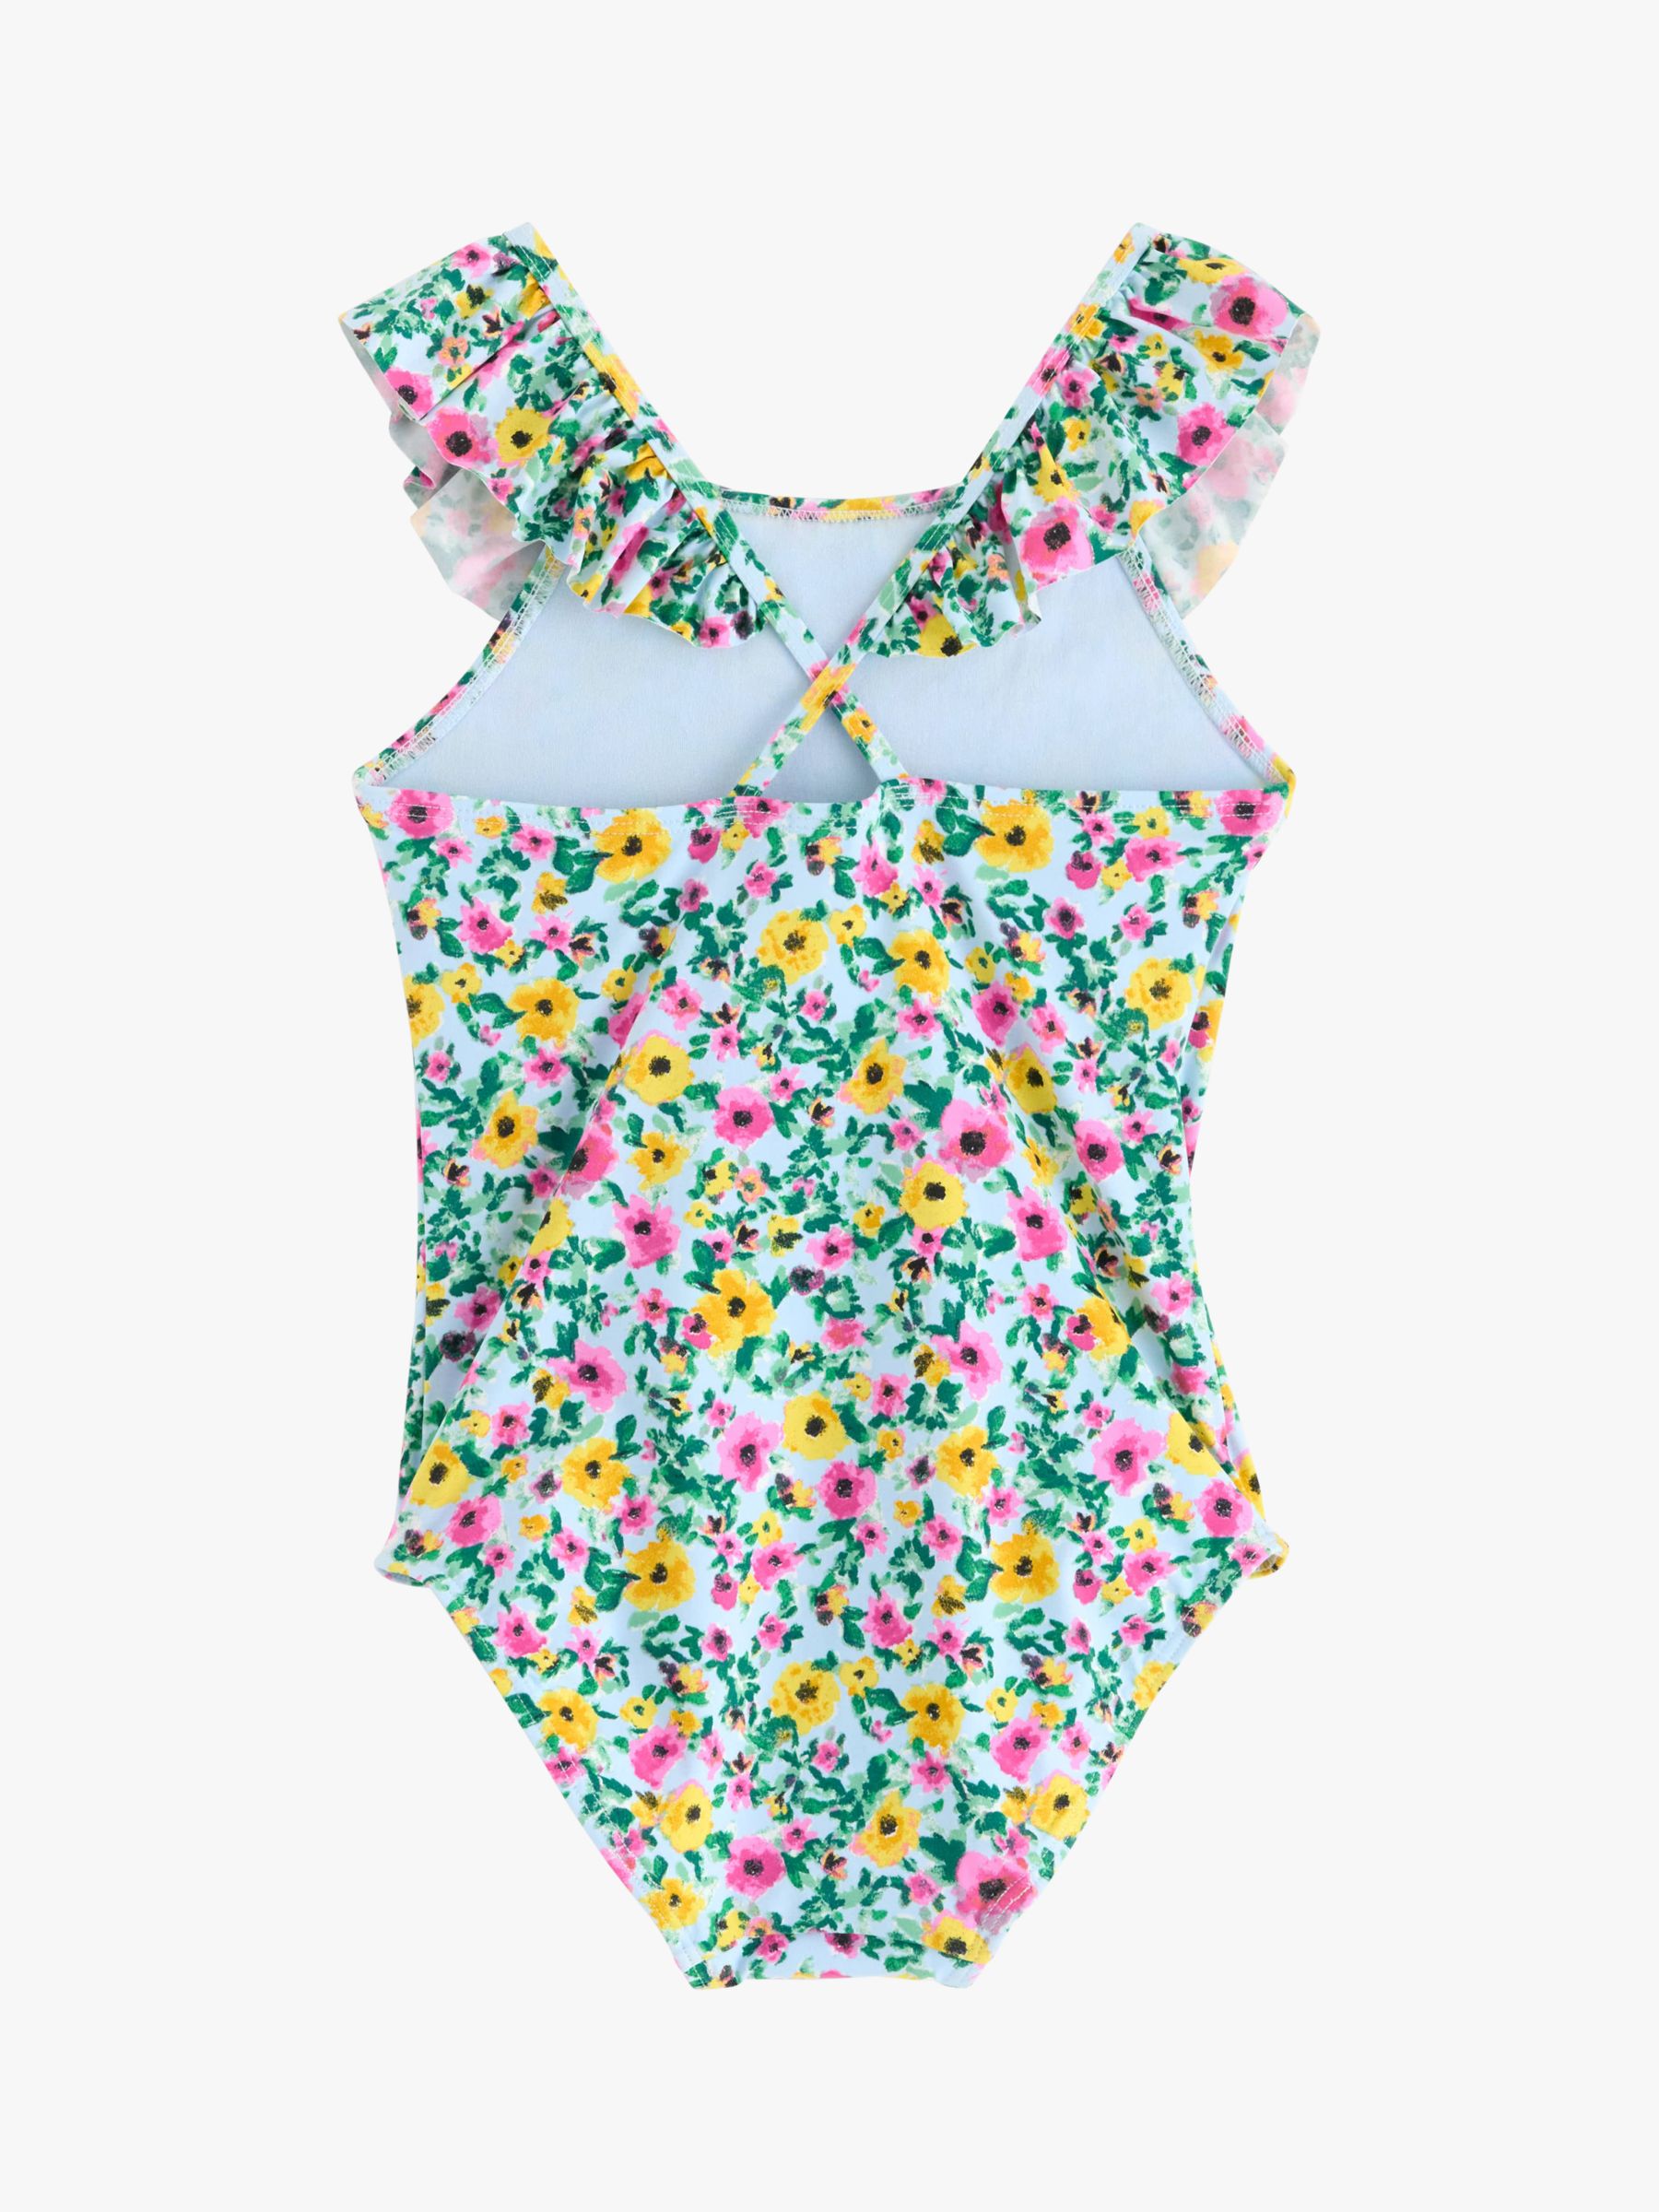 Lindex Kids' Floral Print Swimsuit, Light Blue/Multi, 4-6 years